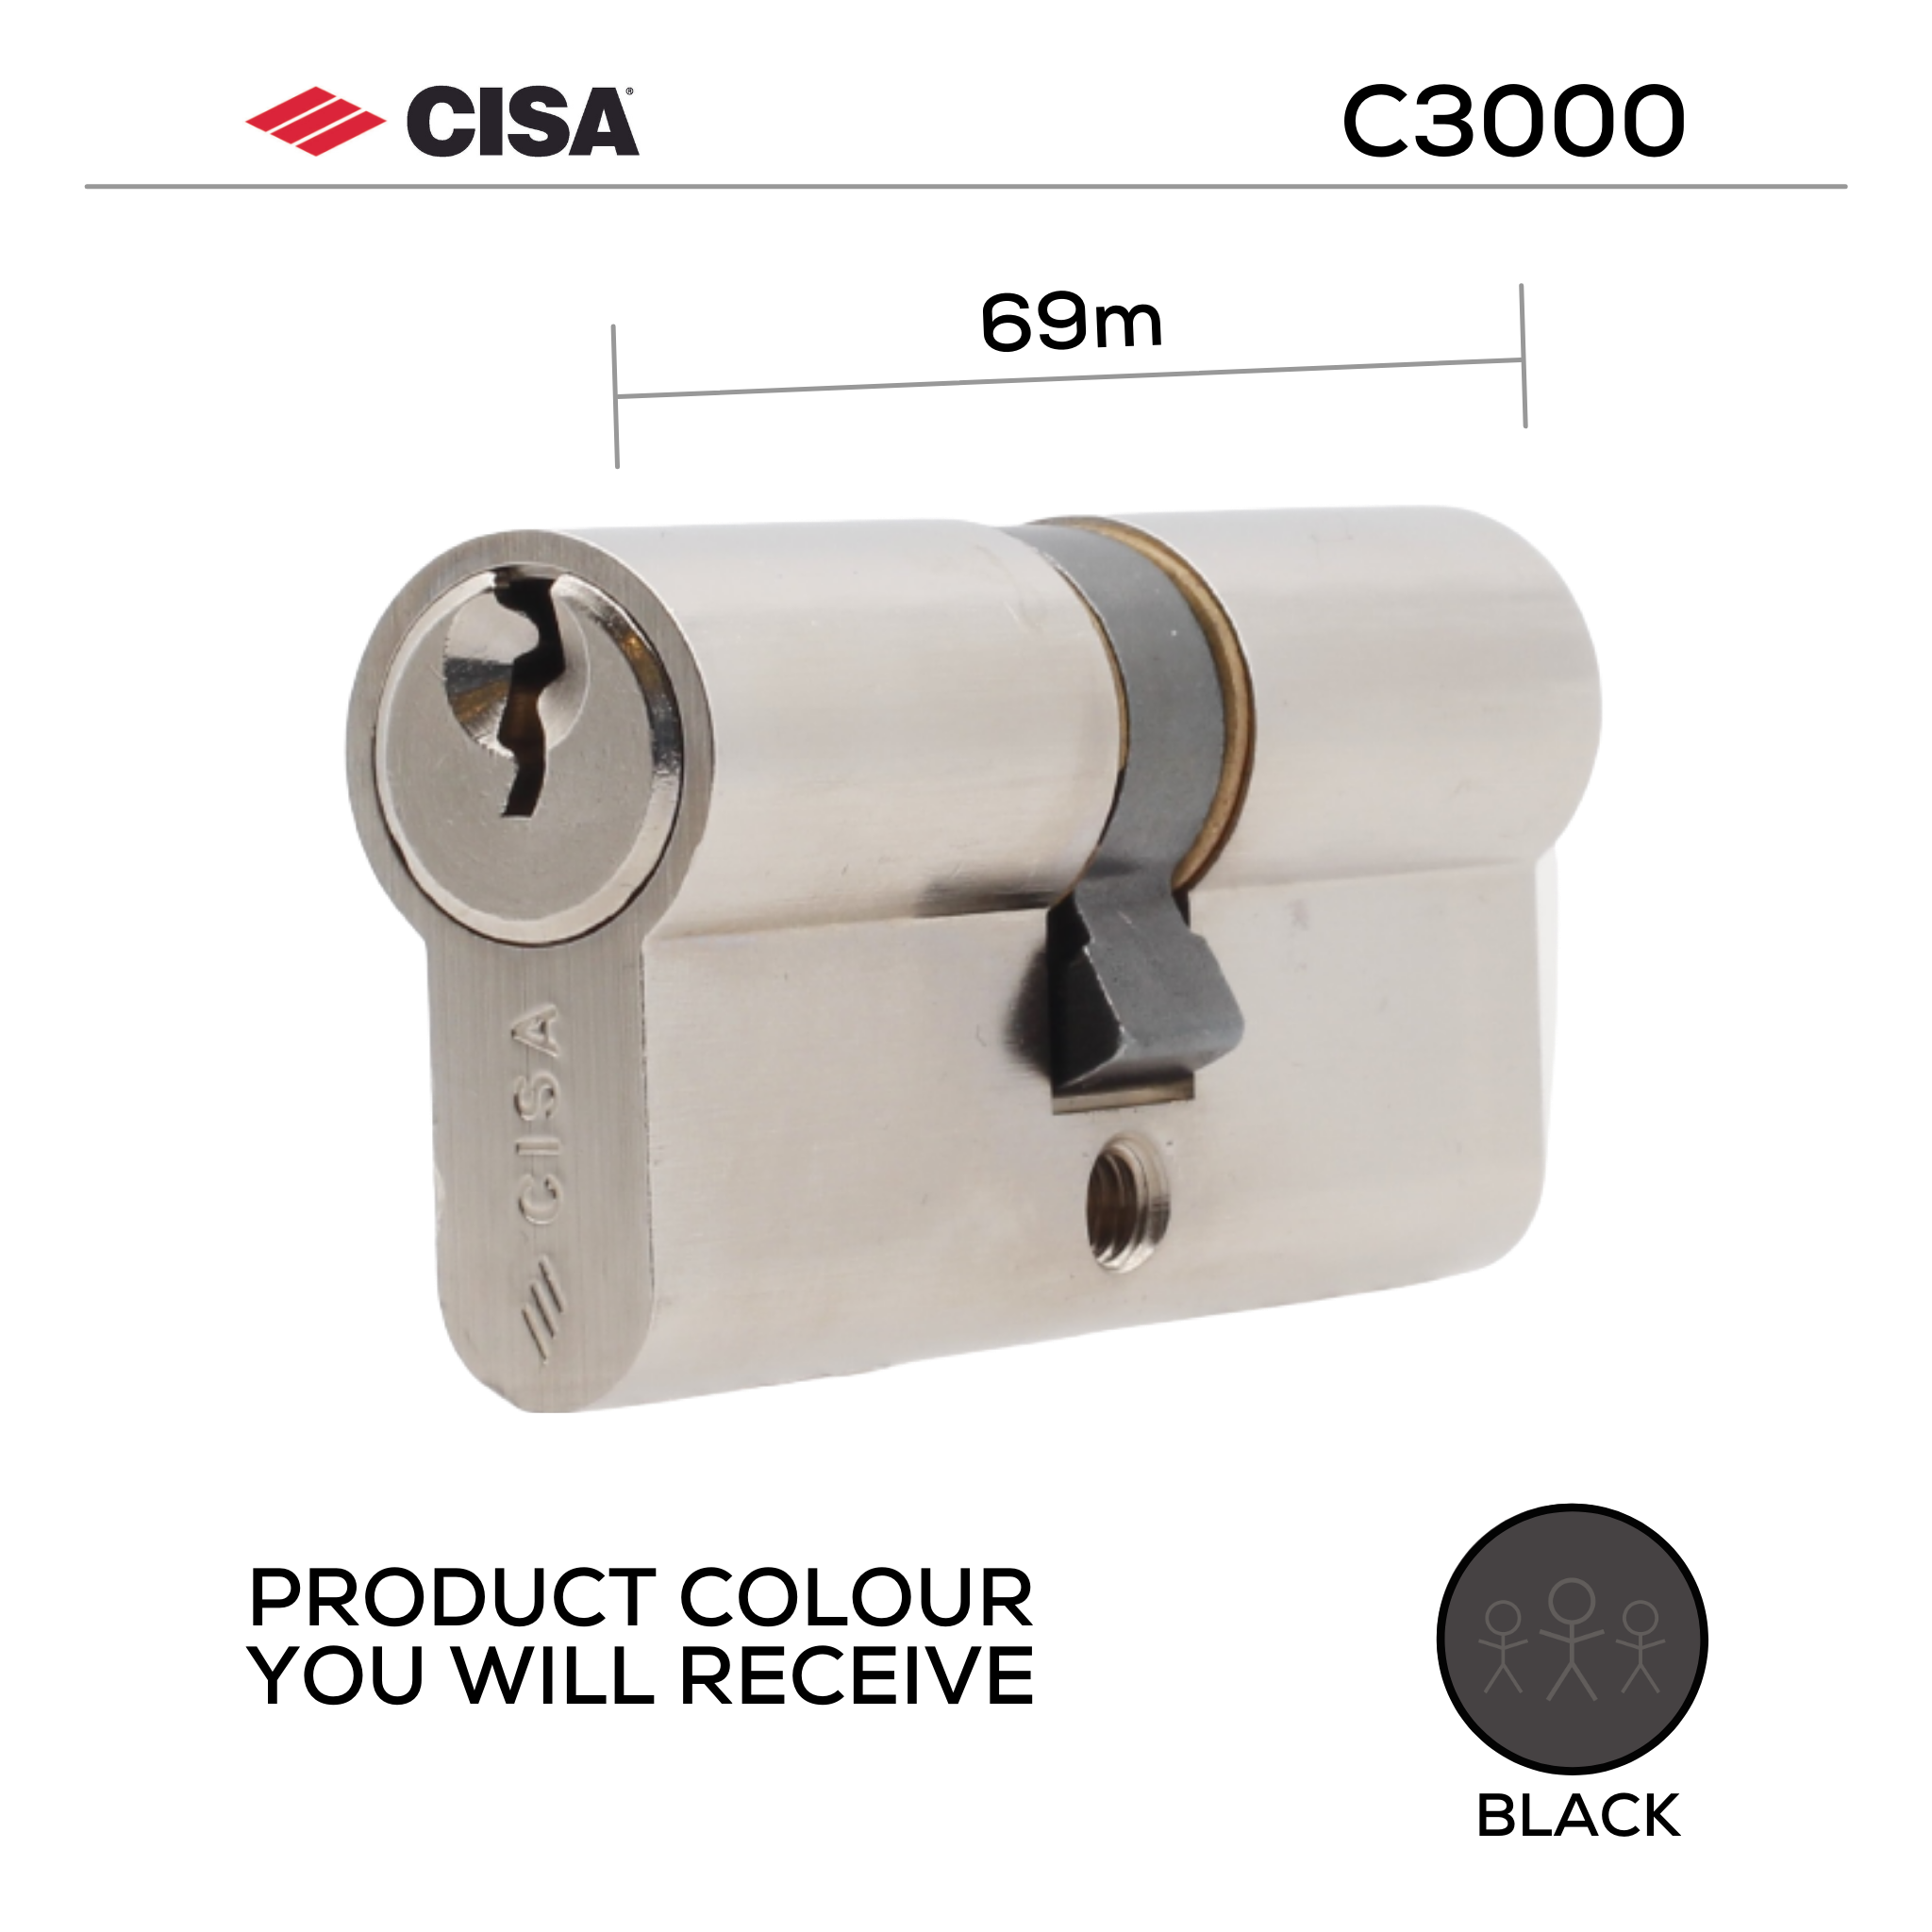 0N310-13-00-BLK-KD, 69mm - 34.5/34.5, Double Cylinder, C3000, Key to Key, Keyed to Differ (Standard), 3 Keys, 6 Pin, Black, CISA